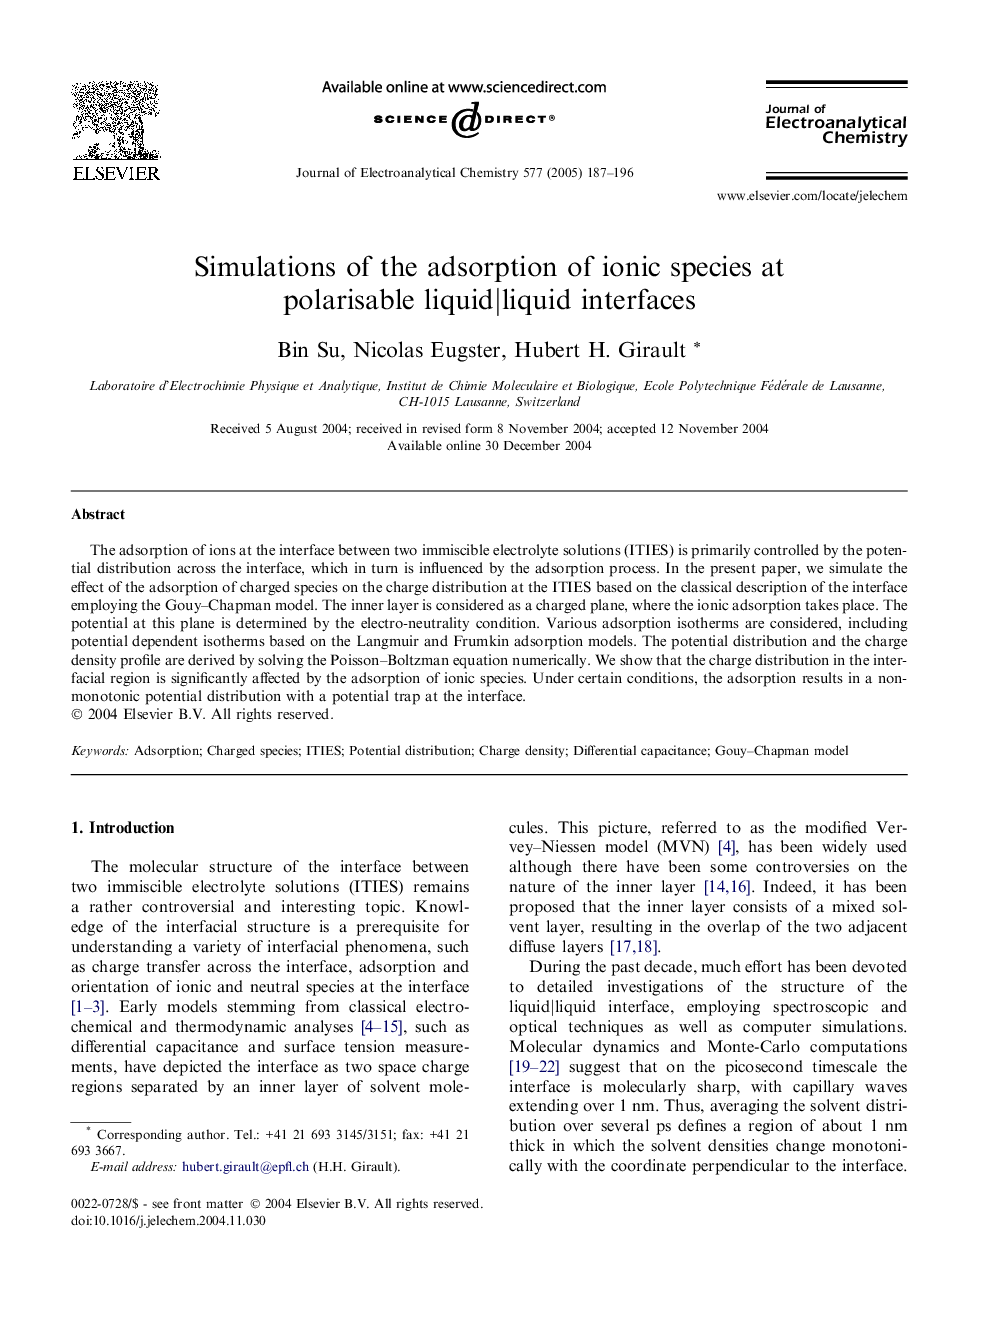 Simulations of the adsorption of ionic species at polarisable liquidâ£liquid interfaces